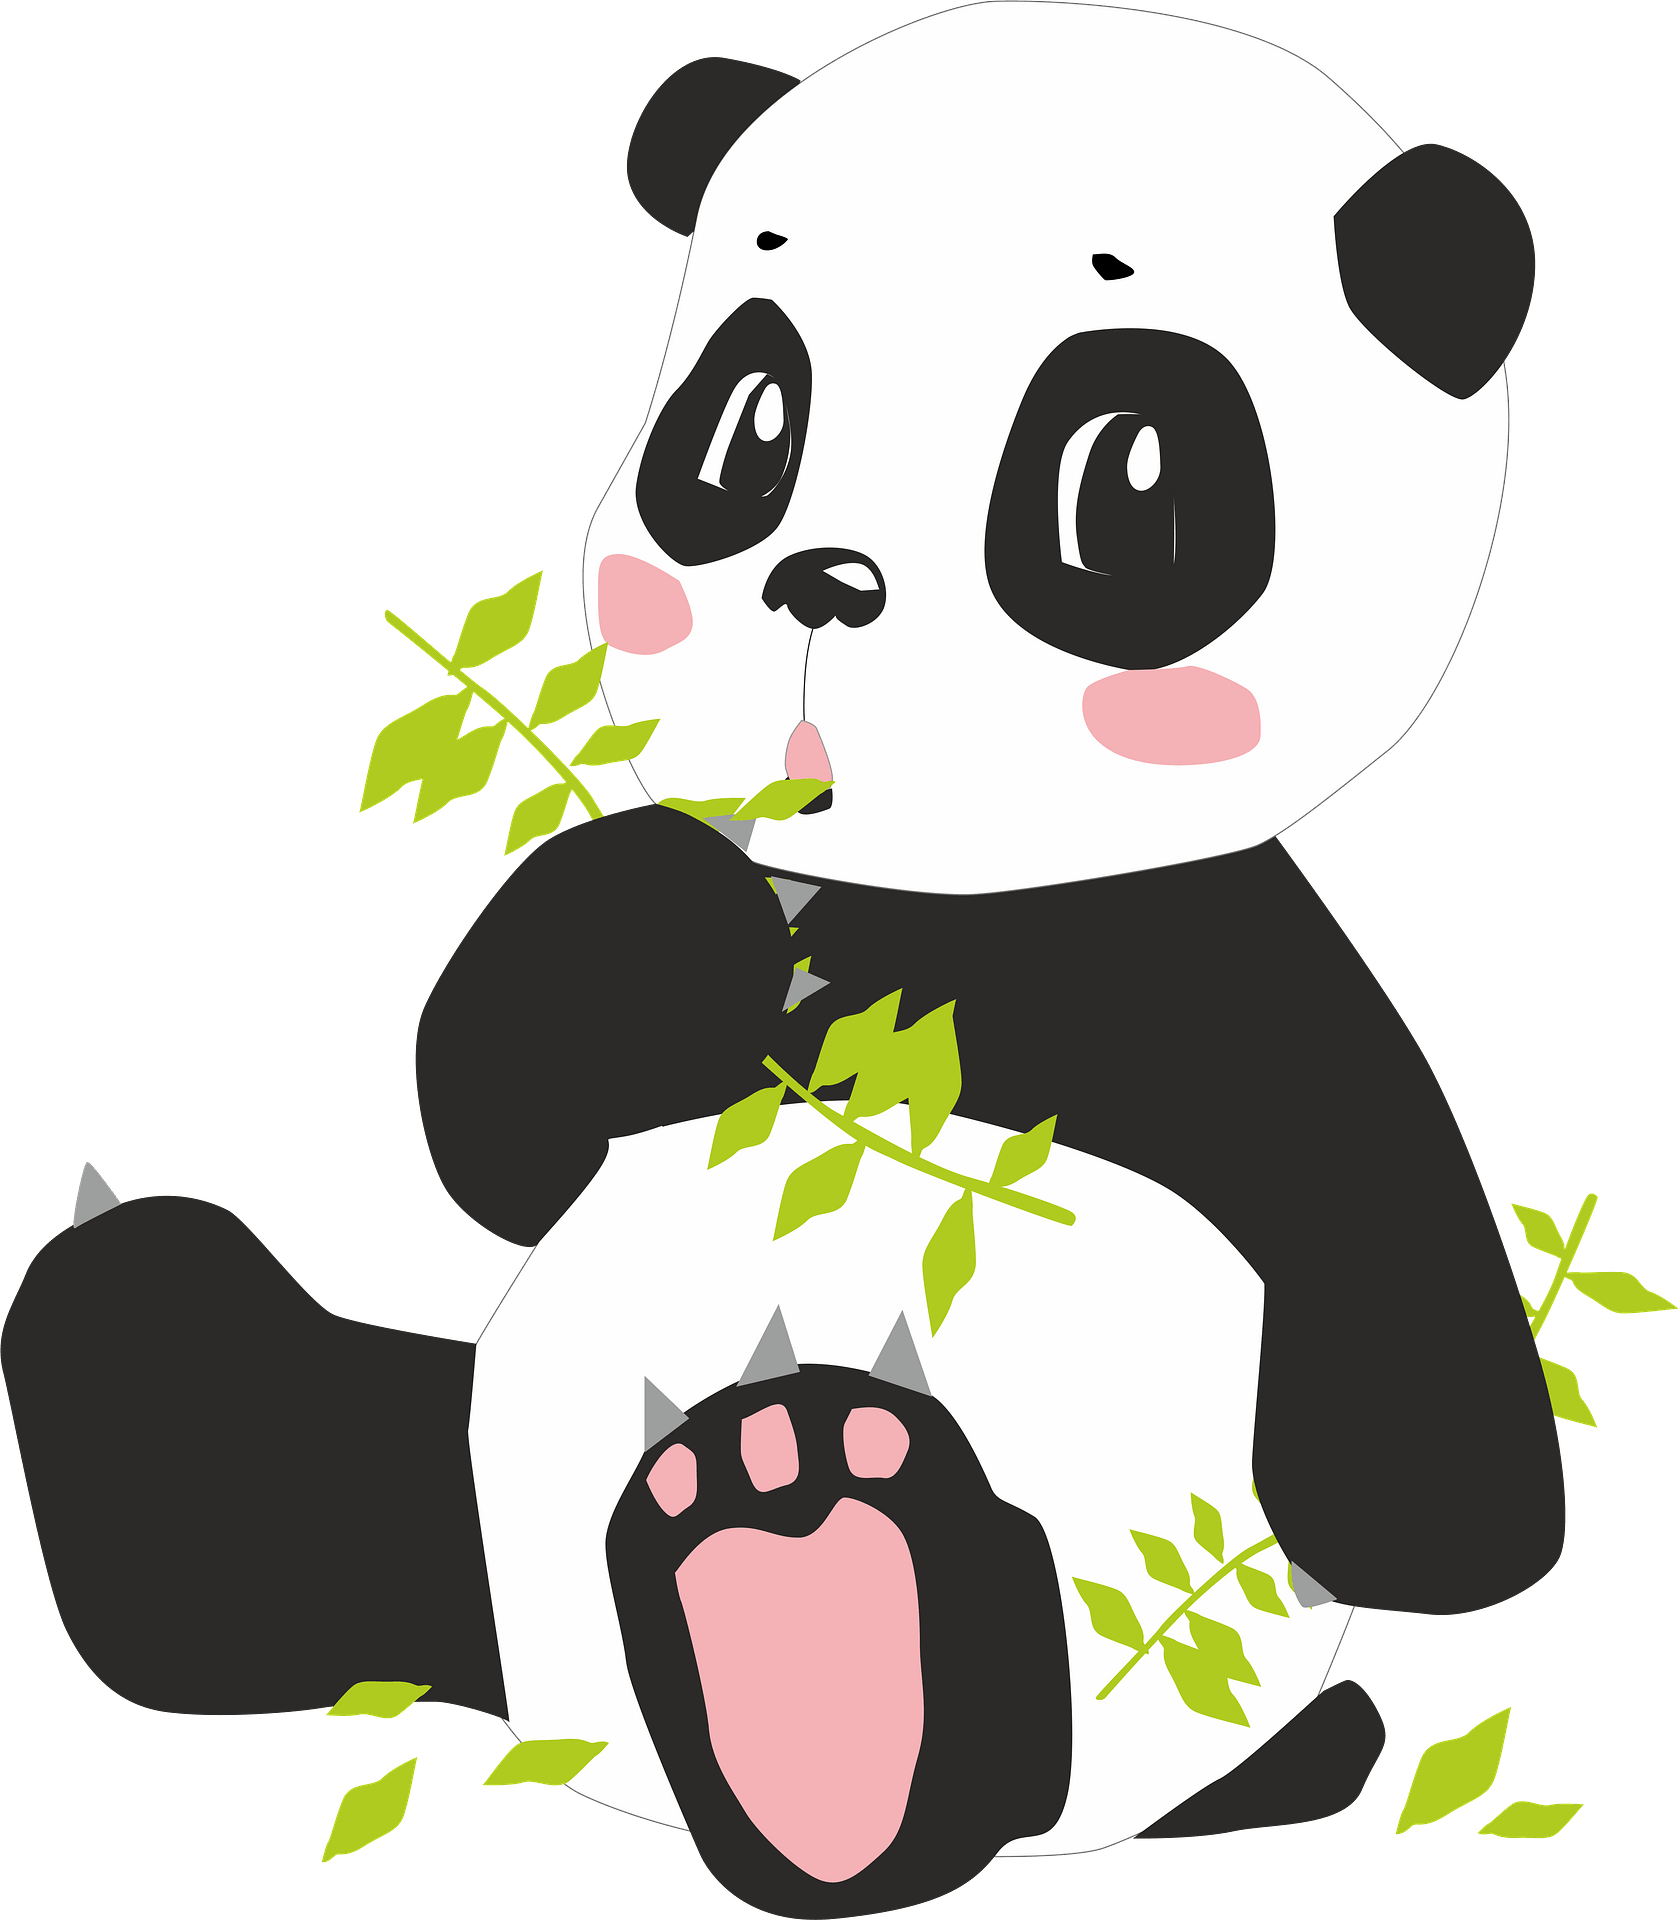 Baby Panda Cliparts | Cute Panda Images for Kids - Clip Art Library